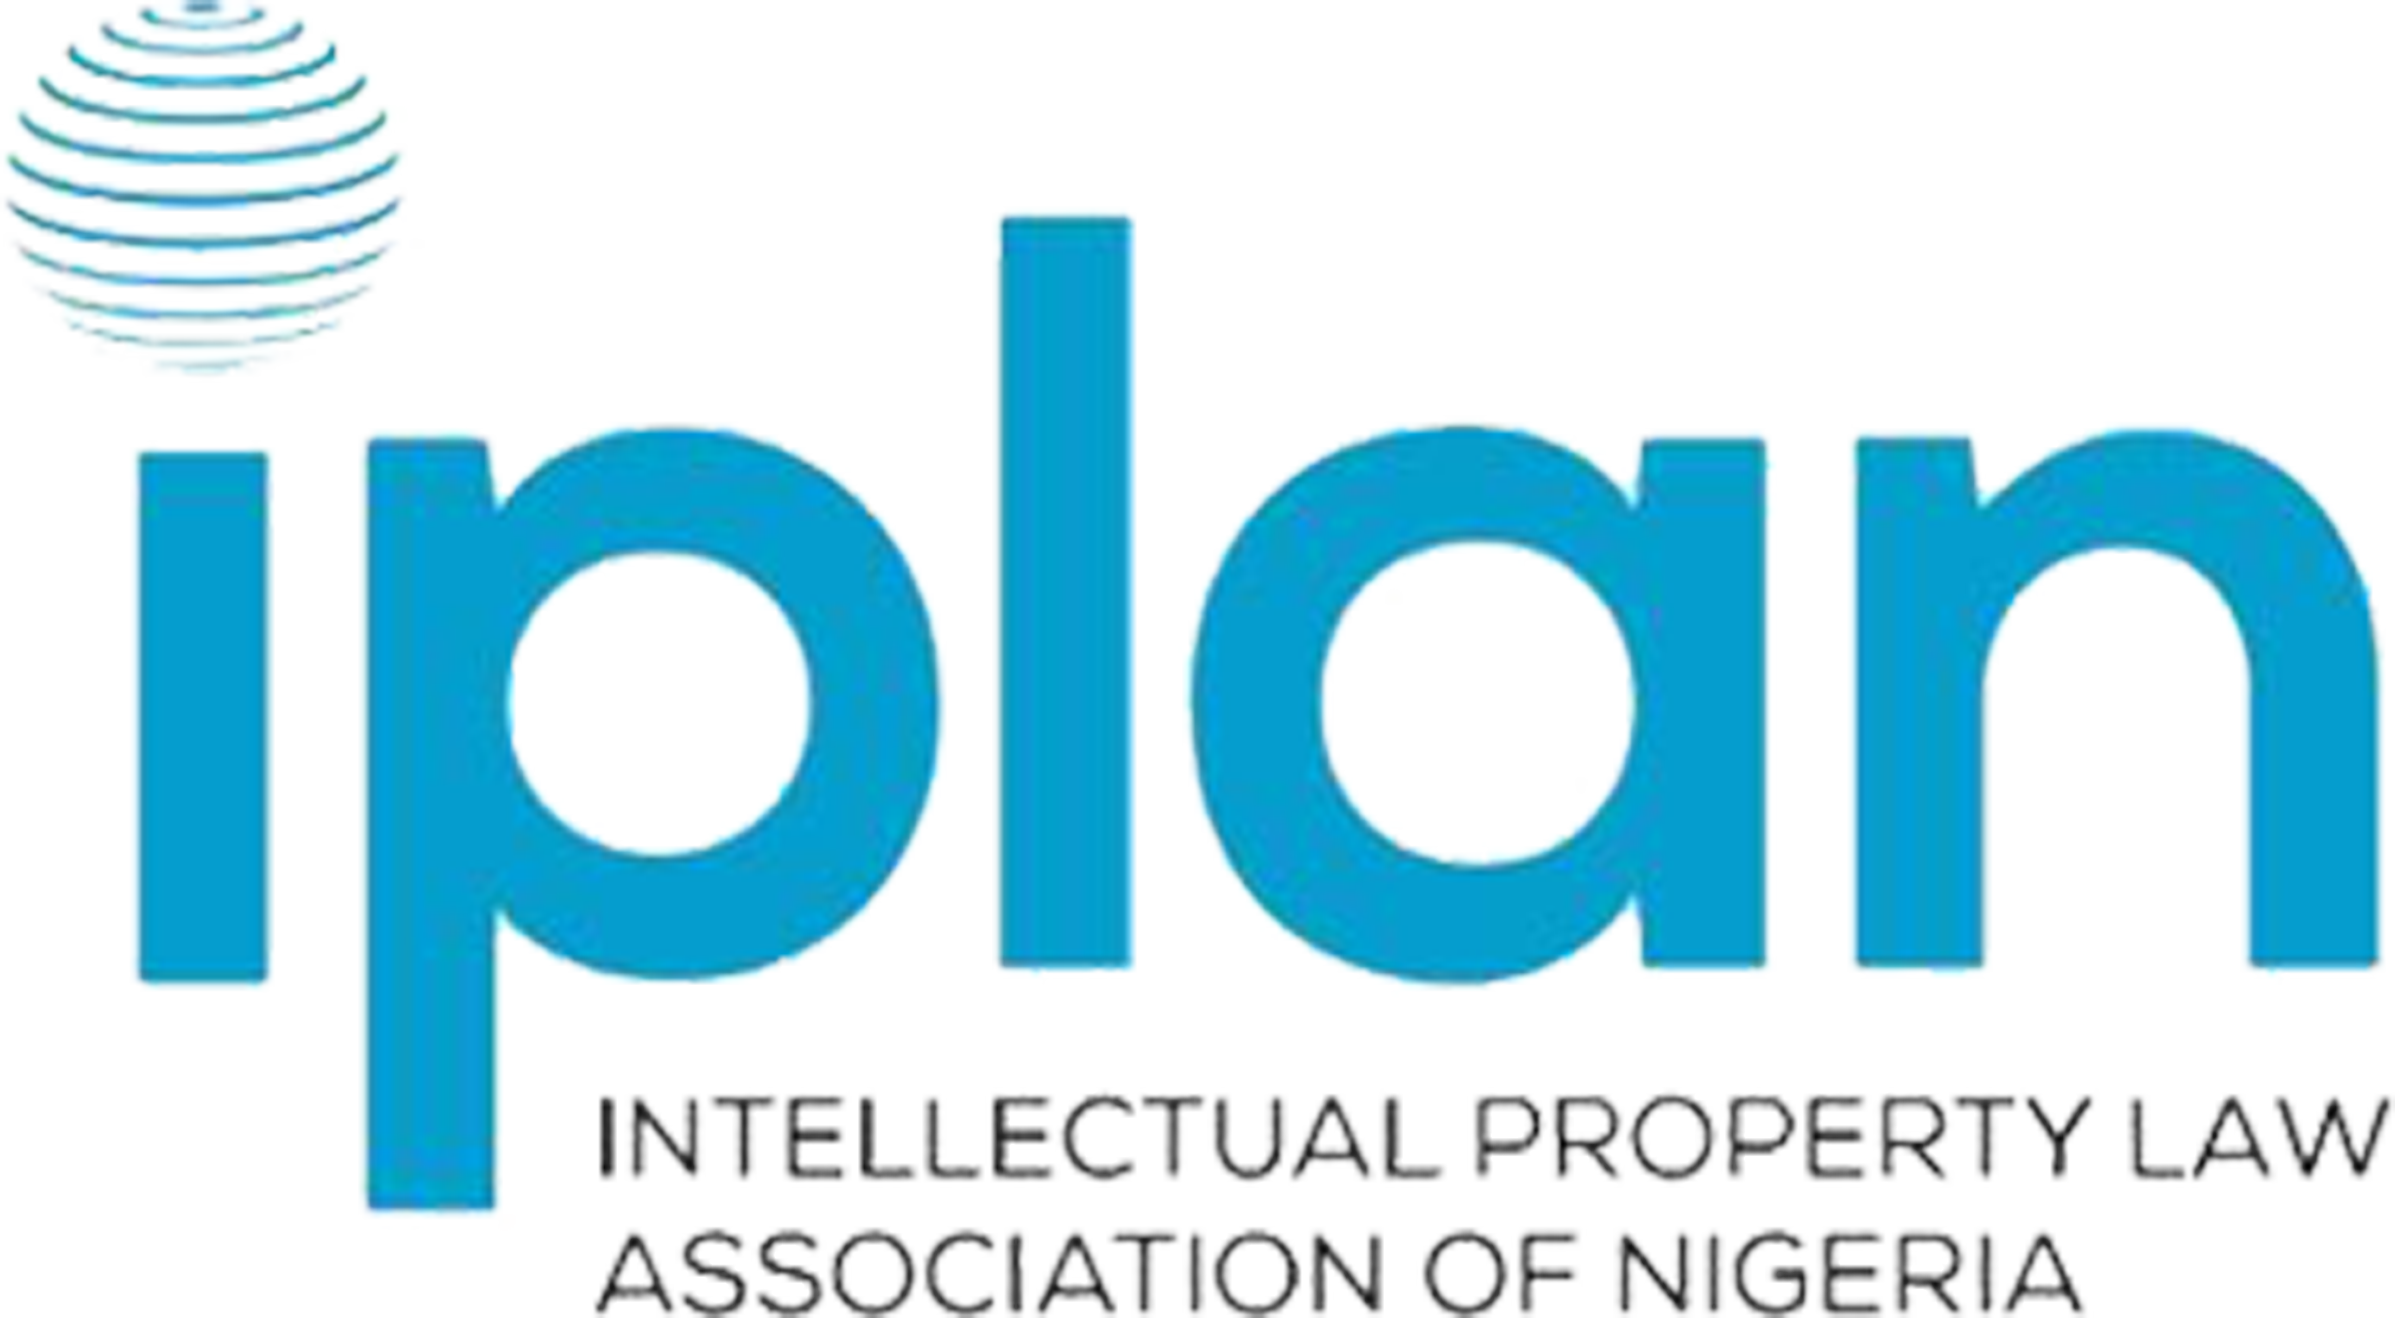 IPLAN – Intellectual Property Law Association of Nigeria